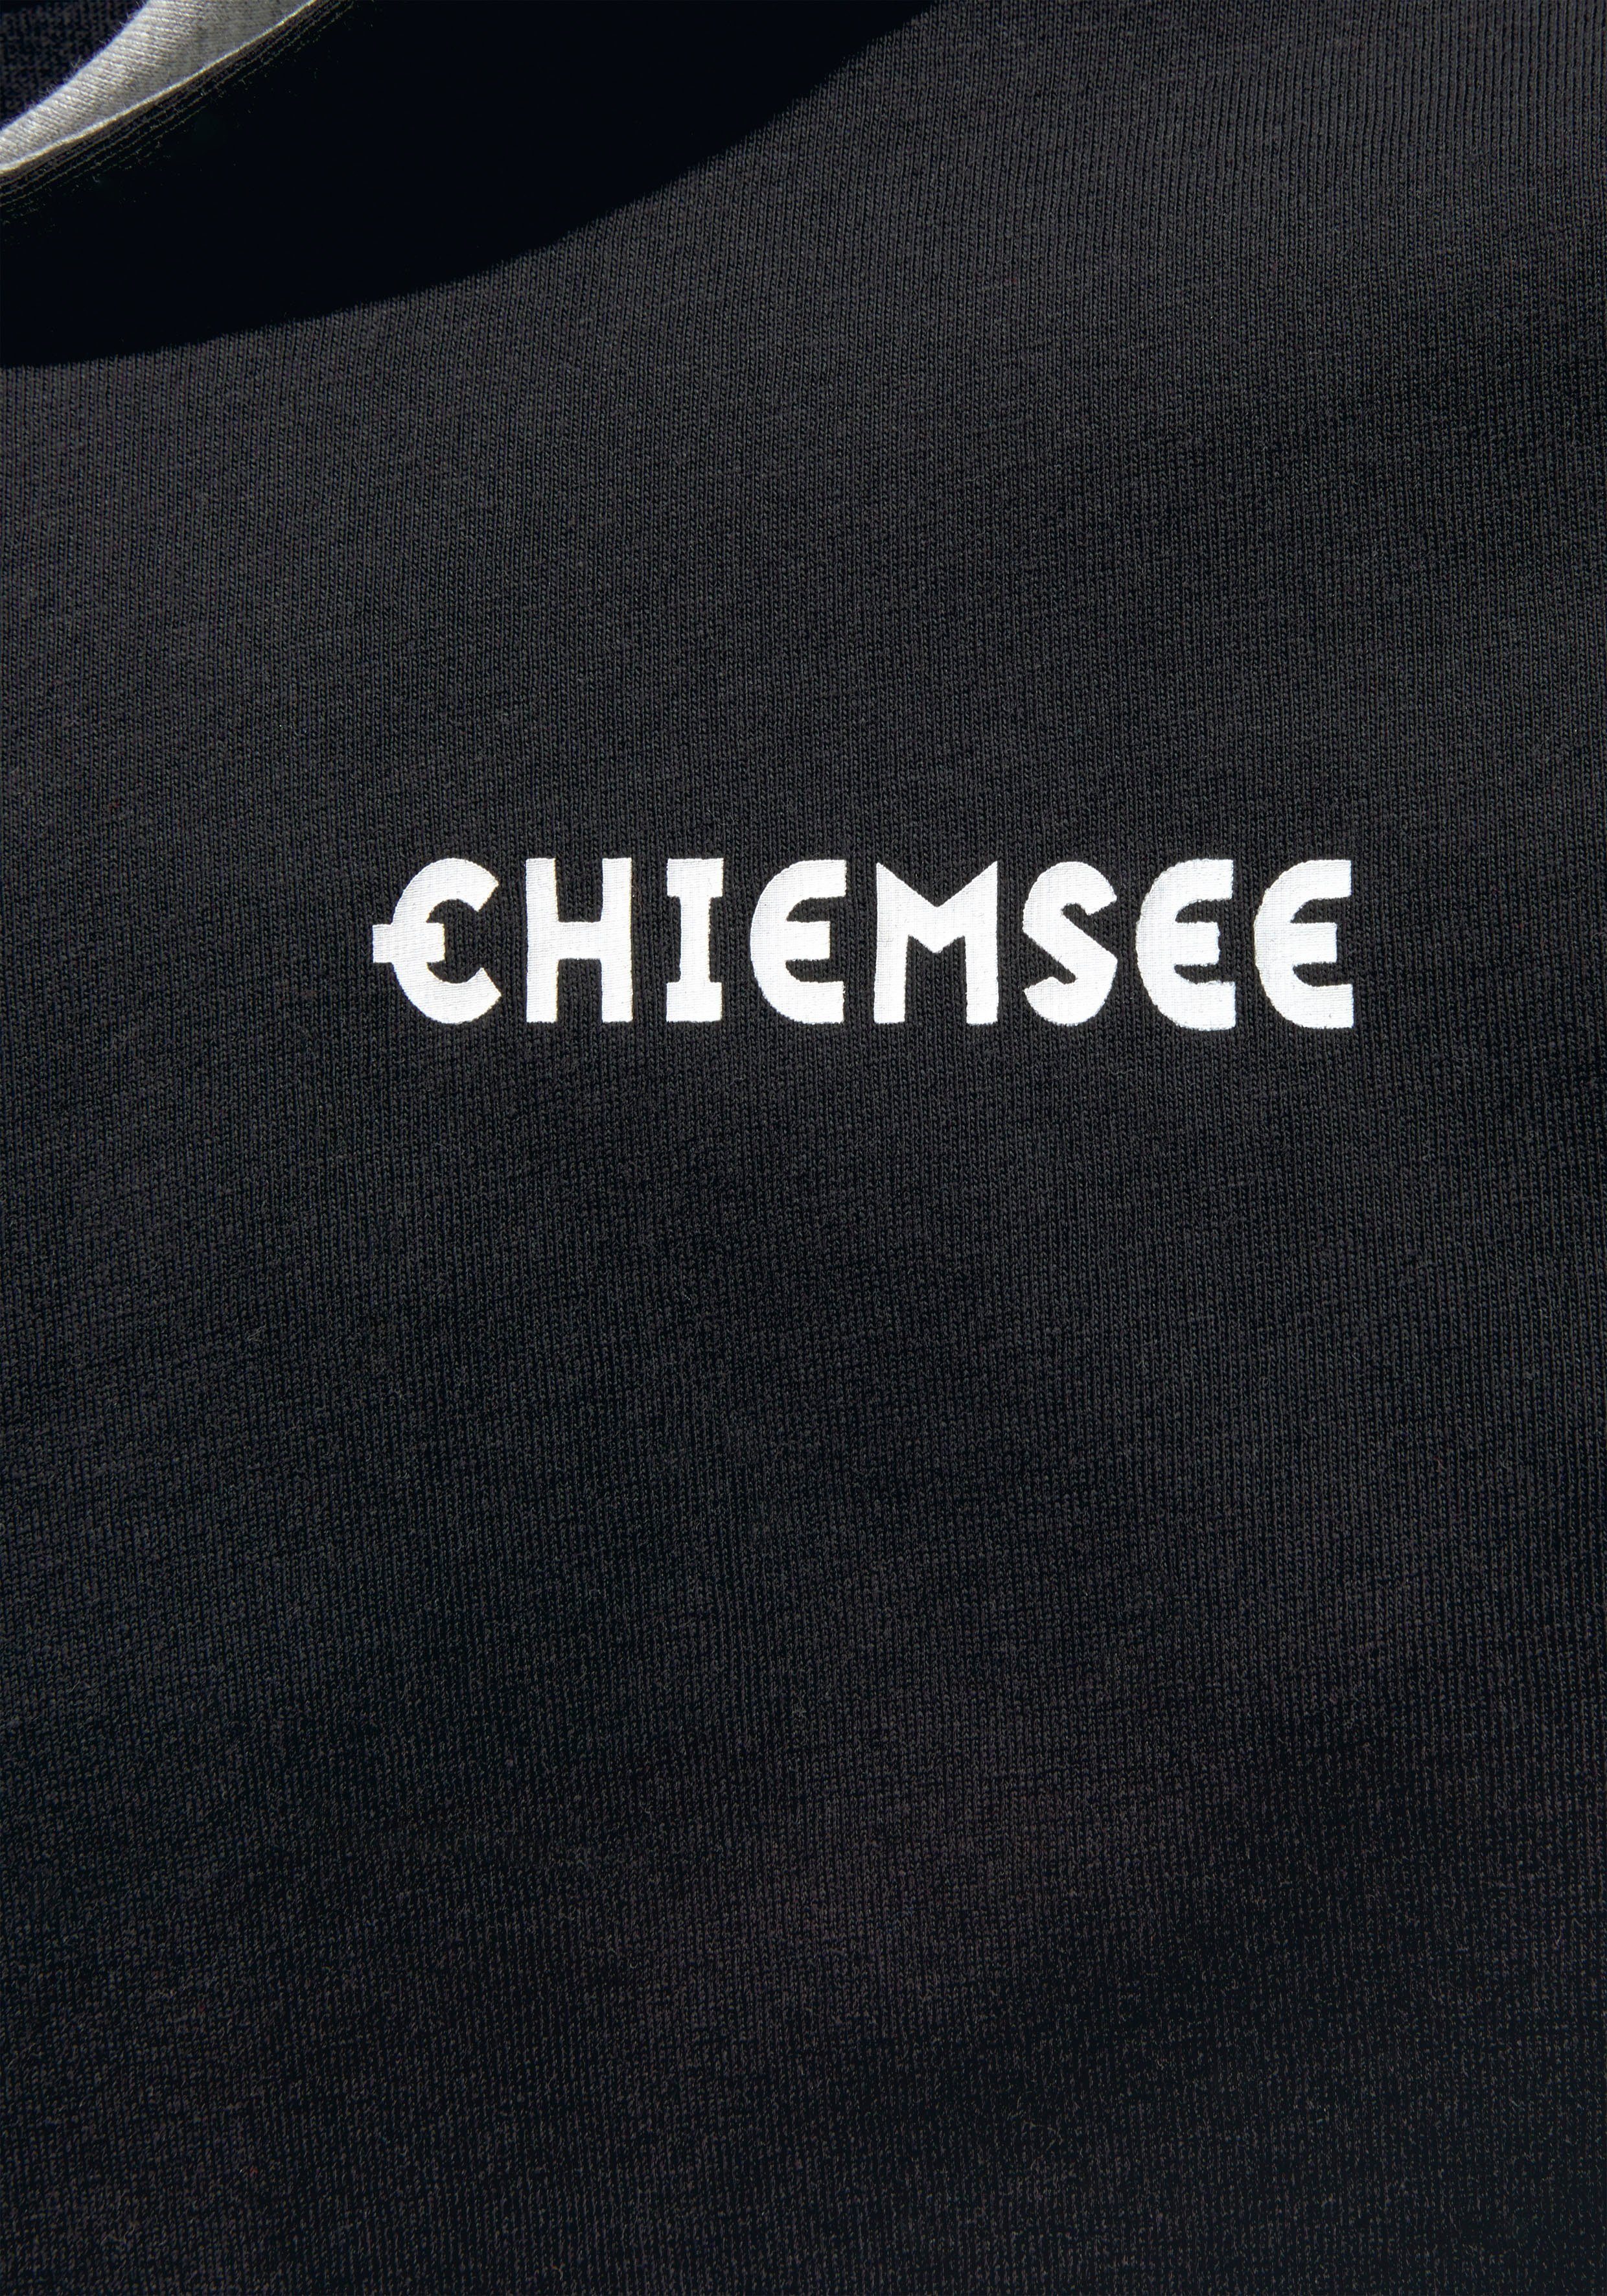 Chiemsee Kapuzenshirt mit Kapuzendruck Rückenprint und